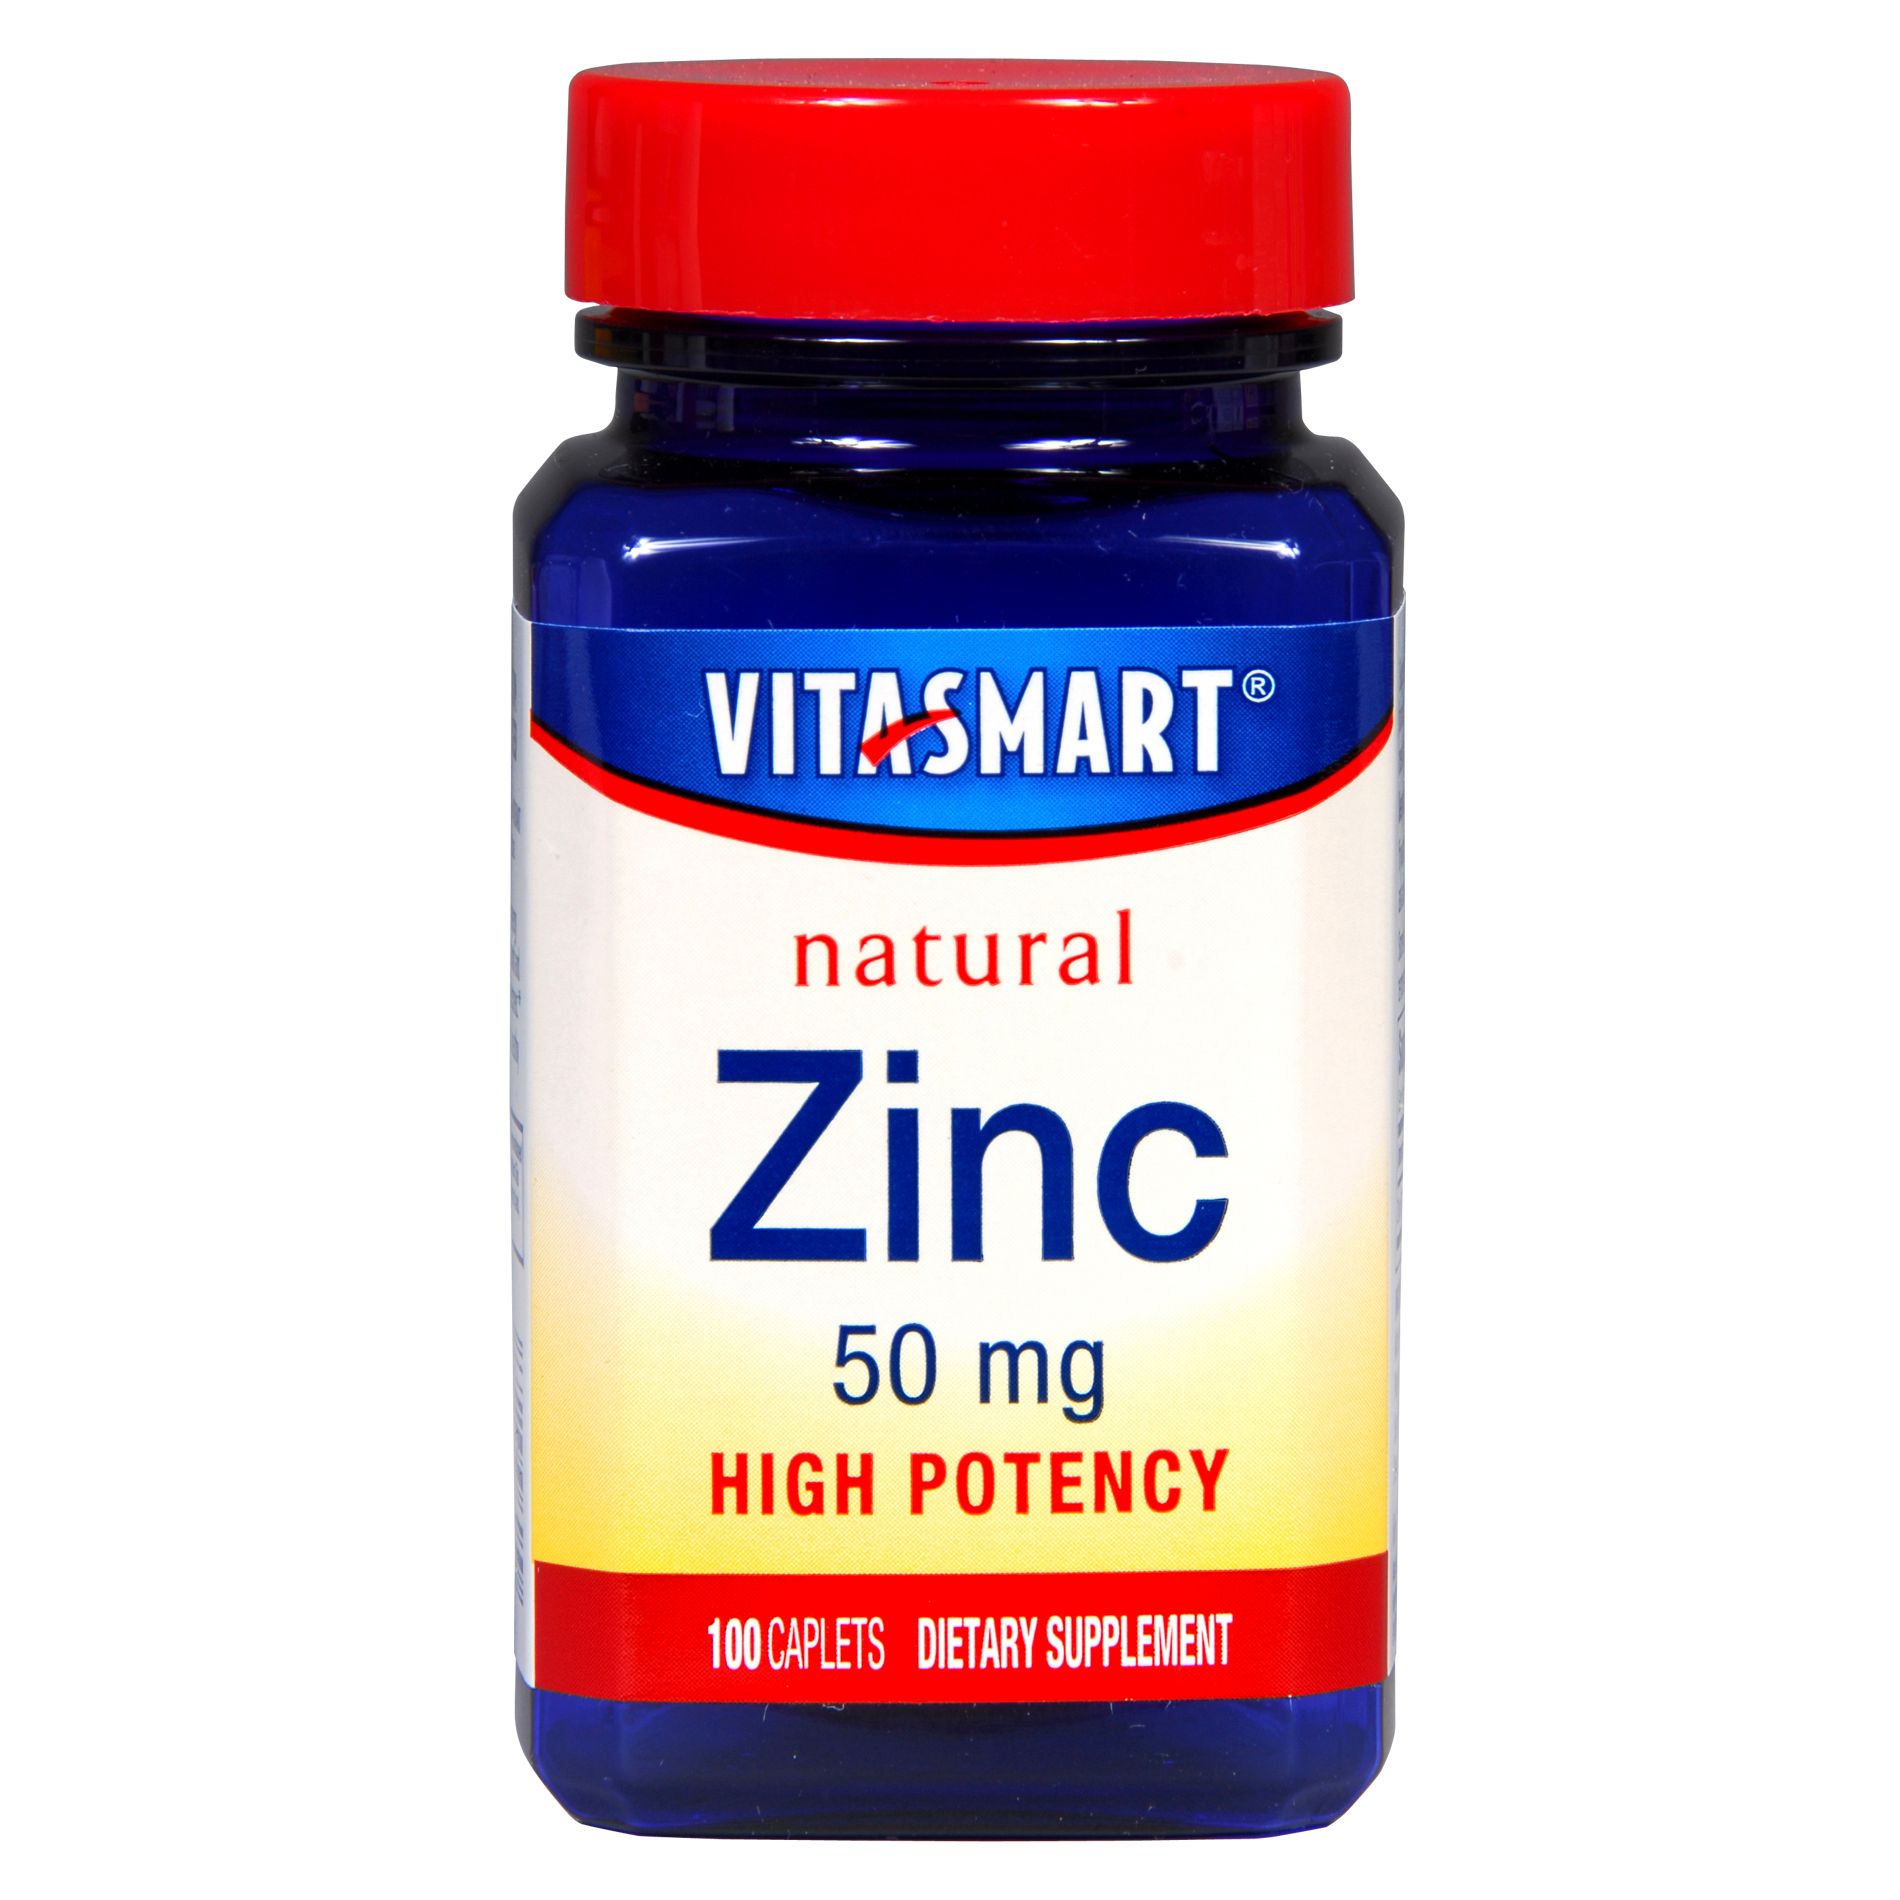 VitaSmart Natural Zinc 50 MG High Potency Dietary Supplement Caplets 100 Count